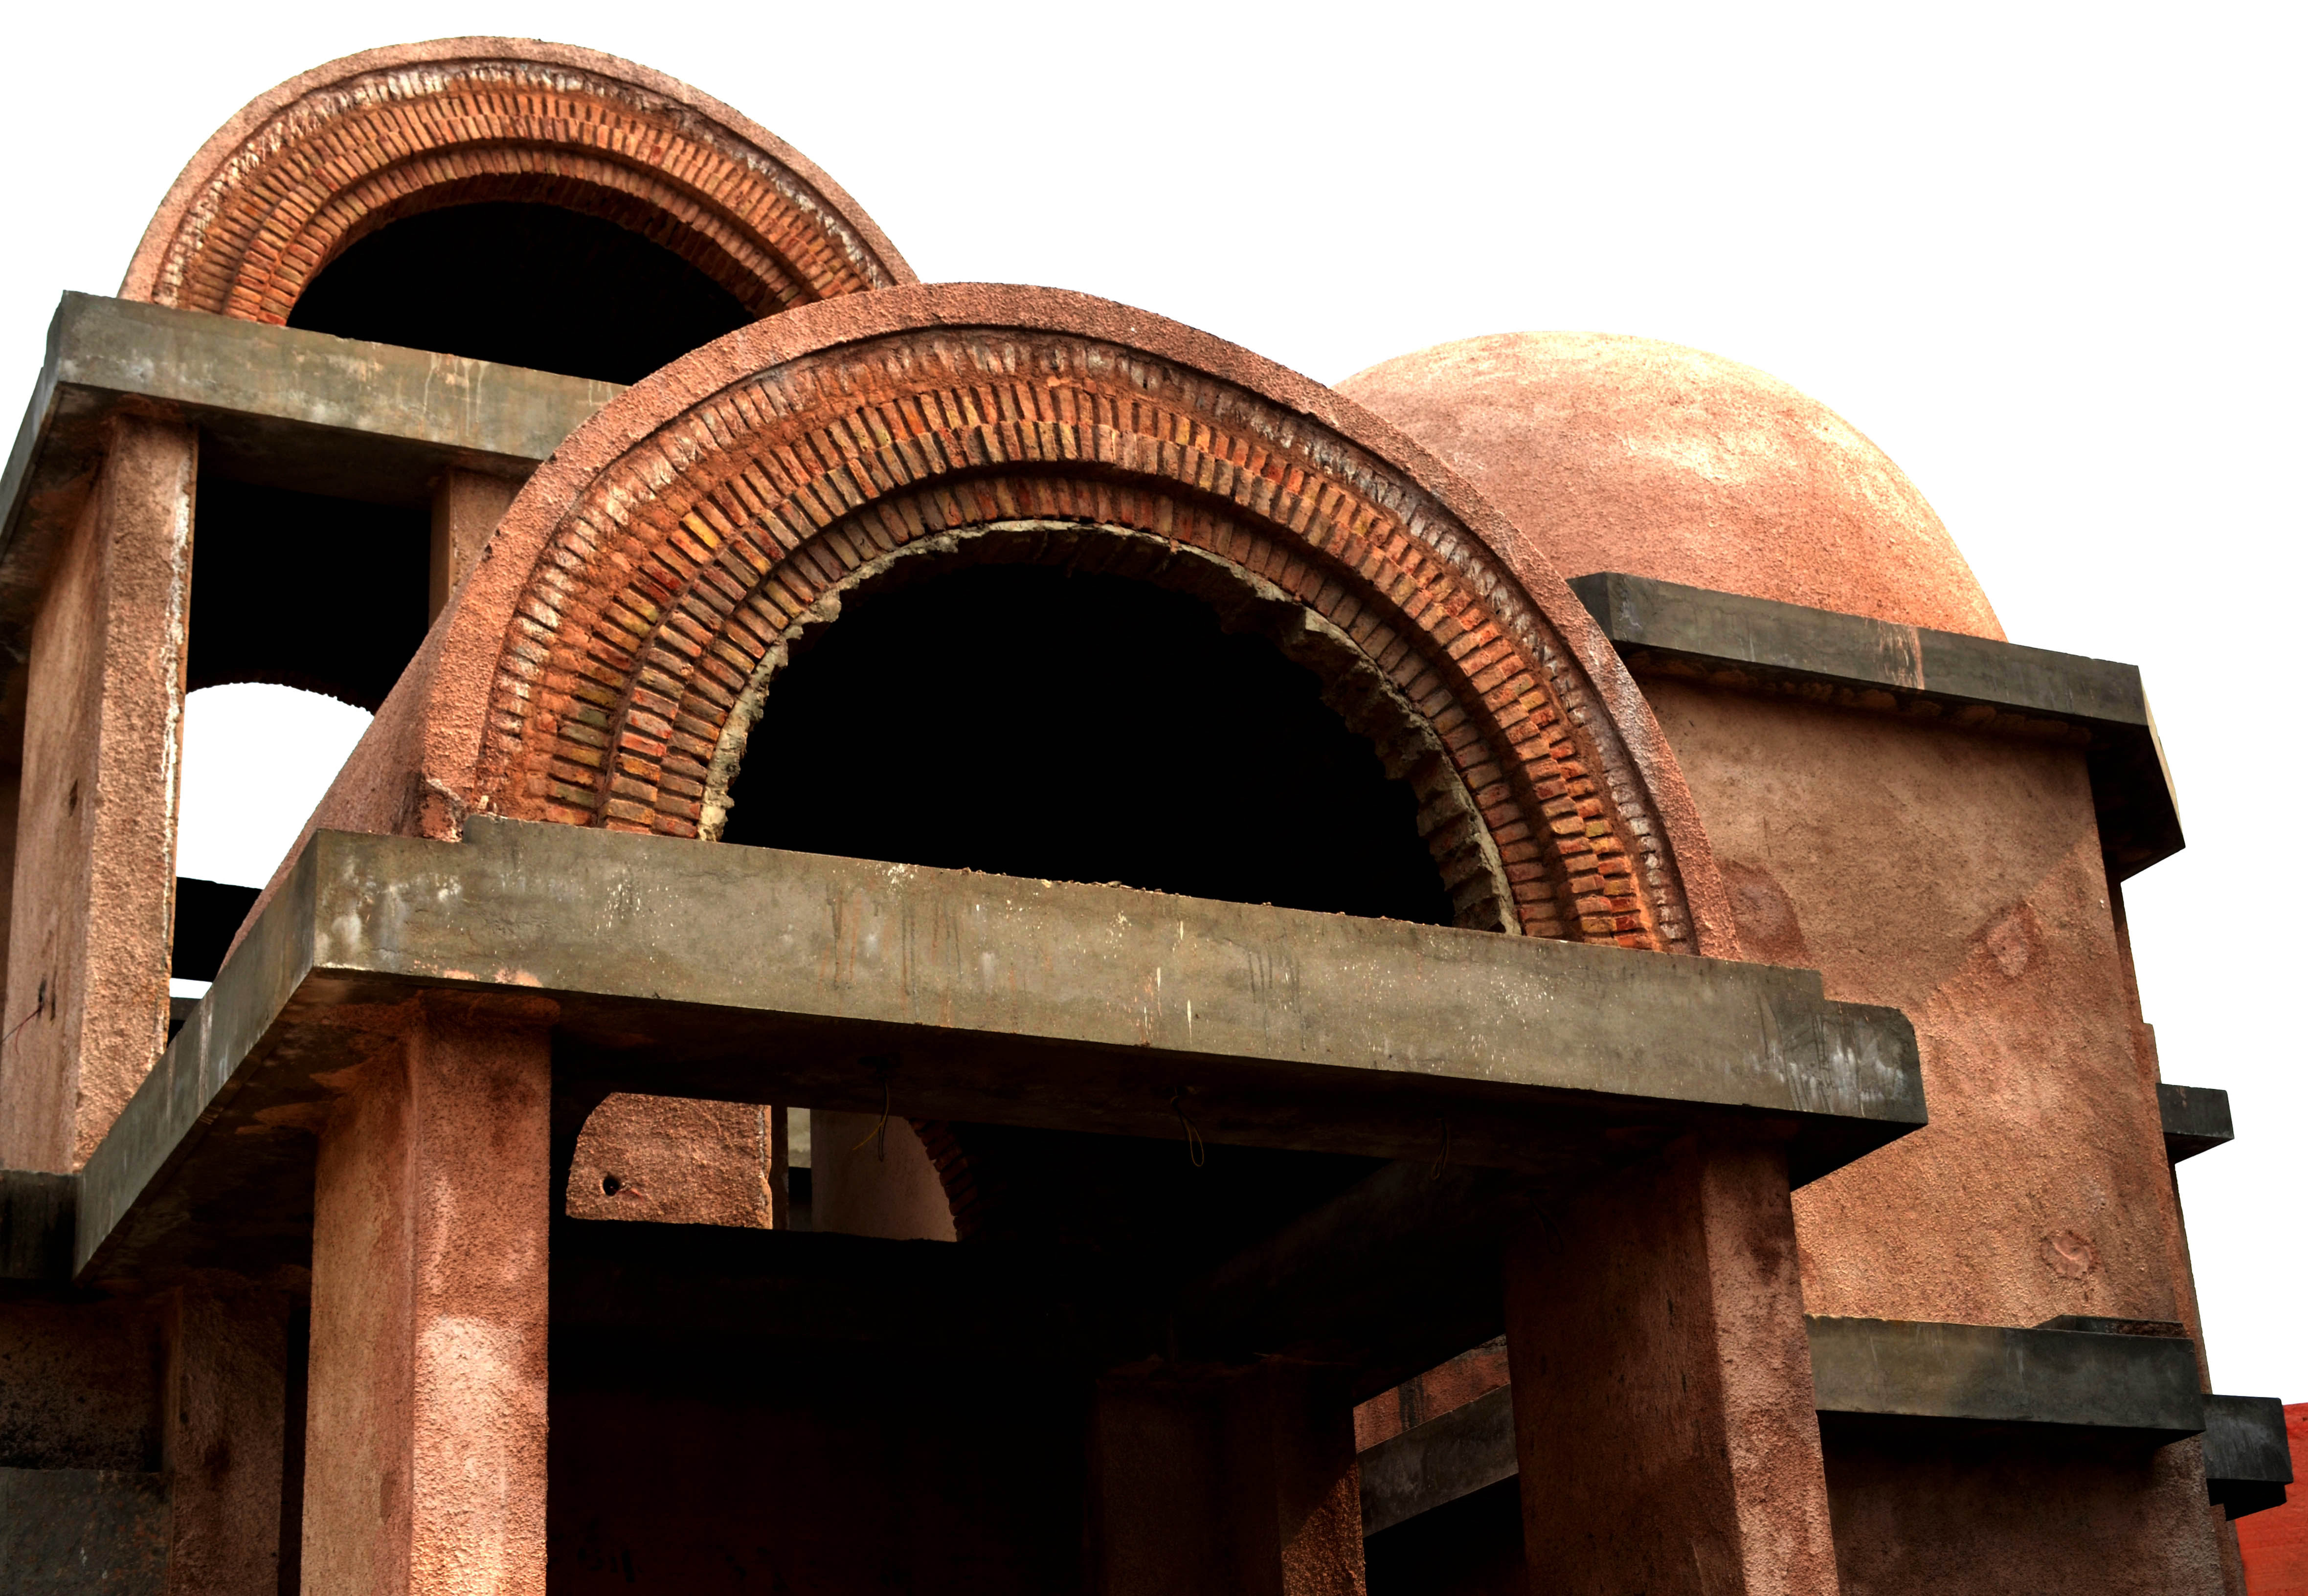 ceramic vaults Vault House by Chaukor Studio, Noida, India